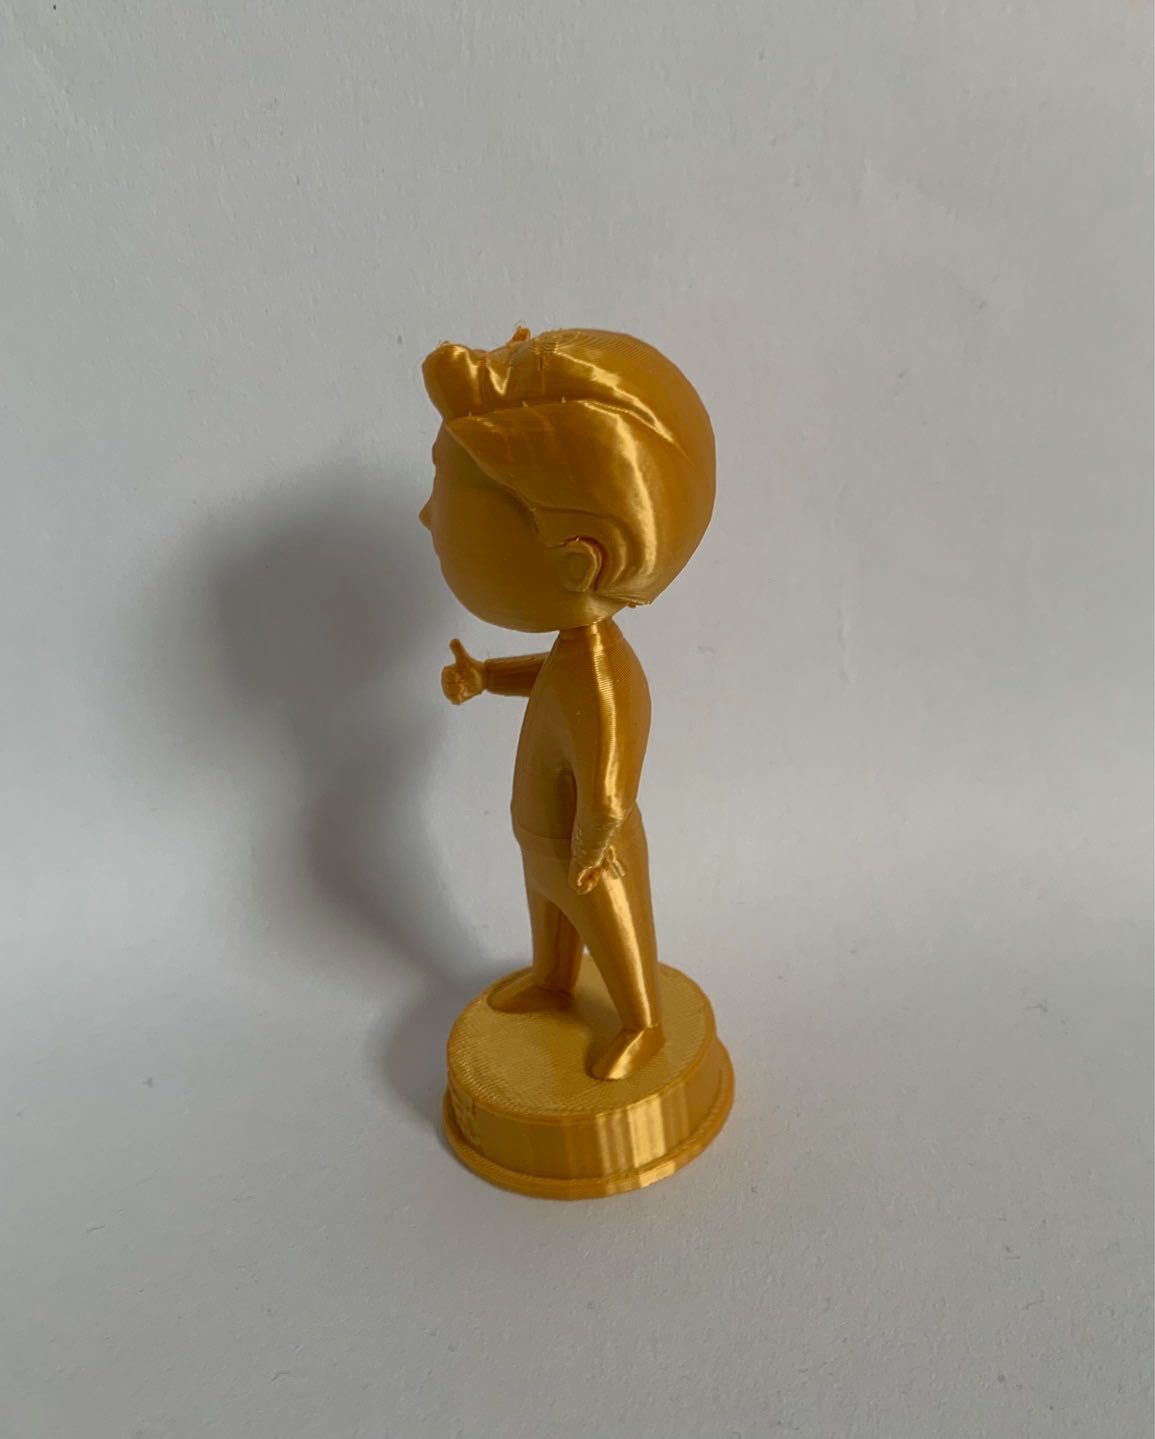 Złoty Vault Tec Boy figurka Fallout druk 3D 11cm